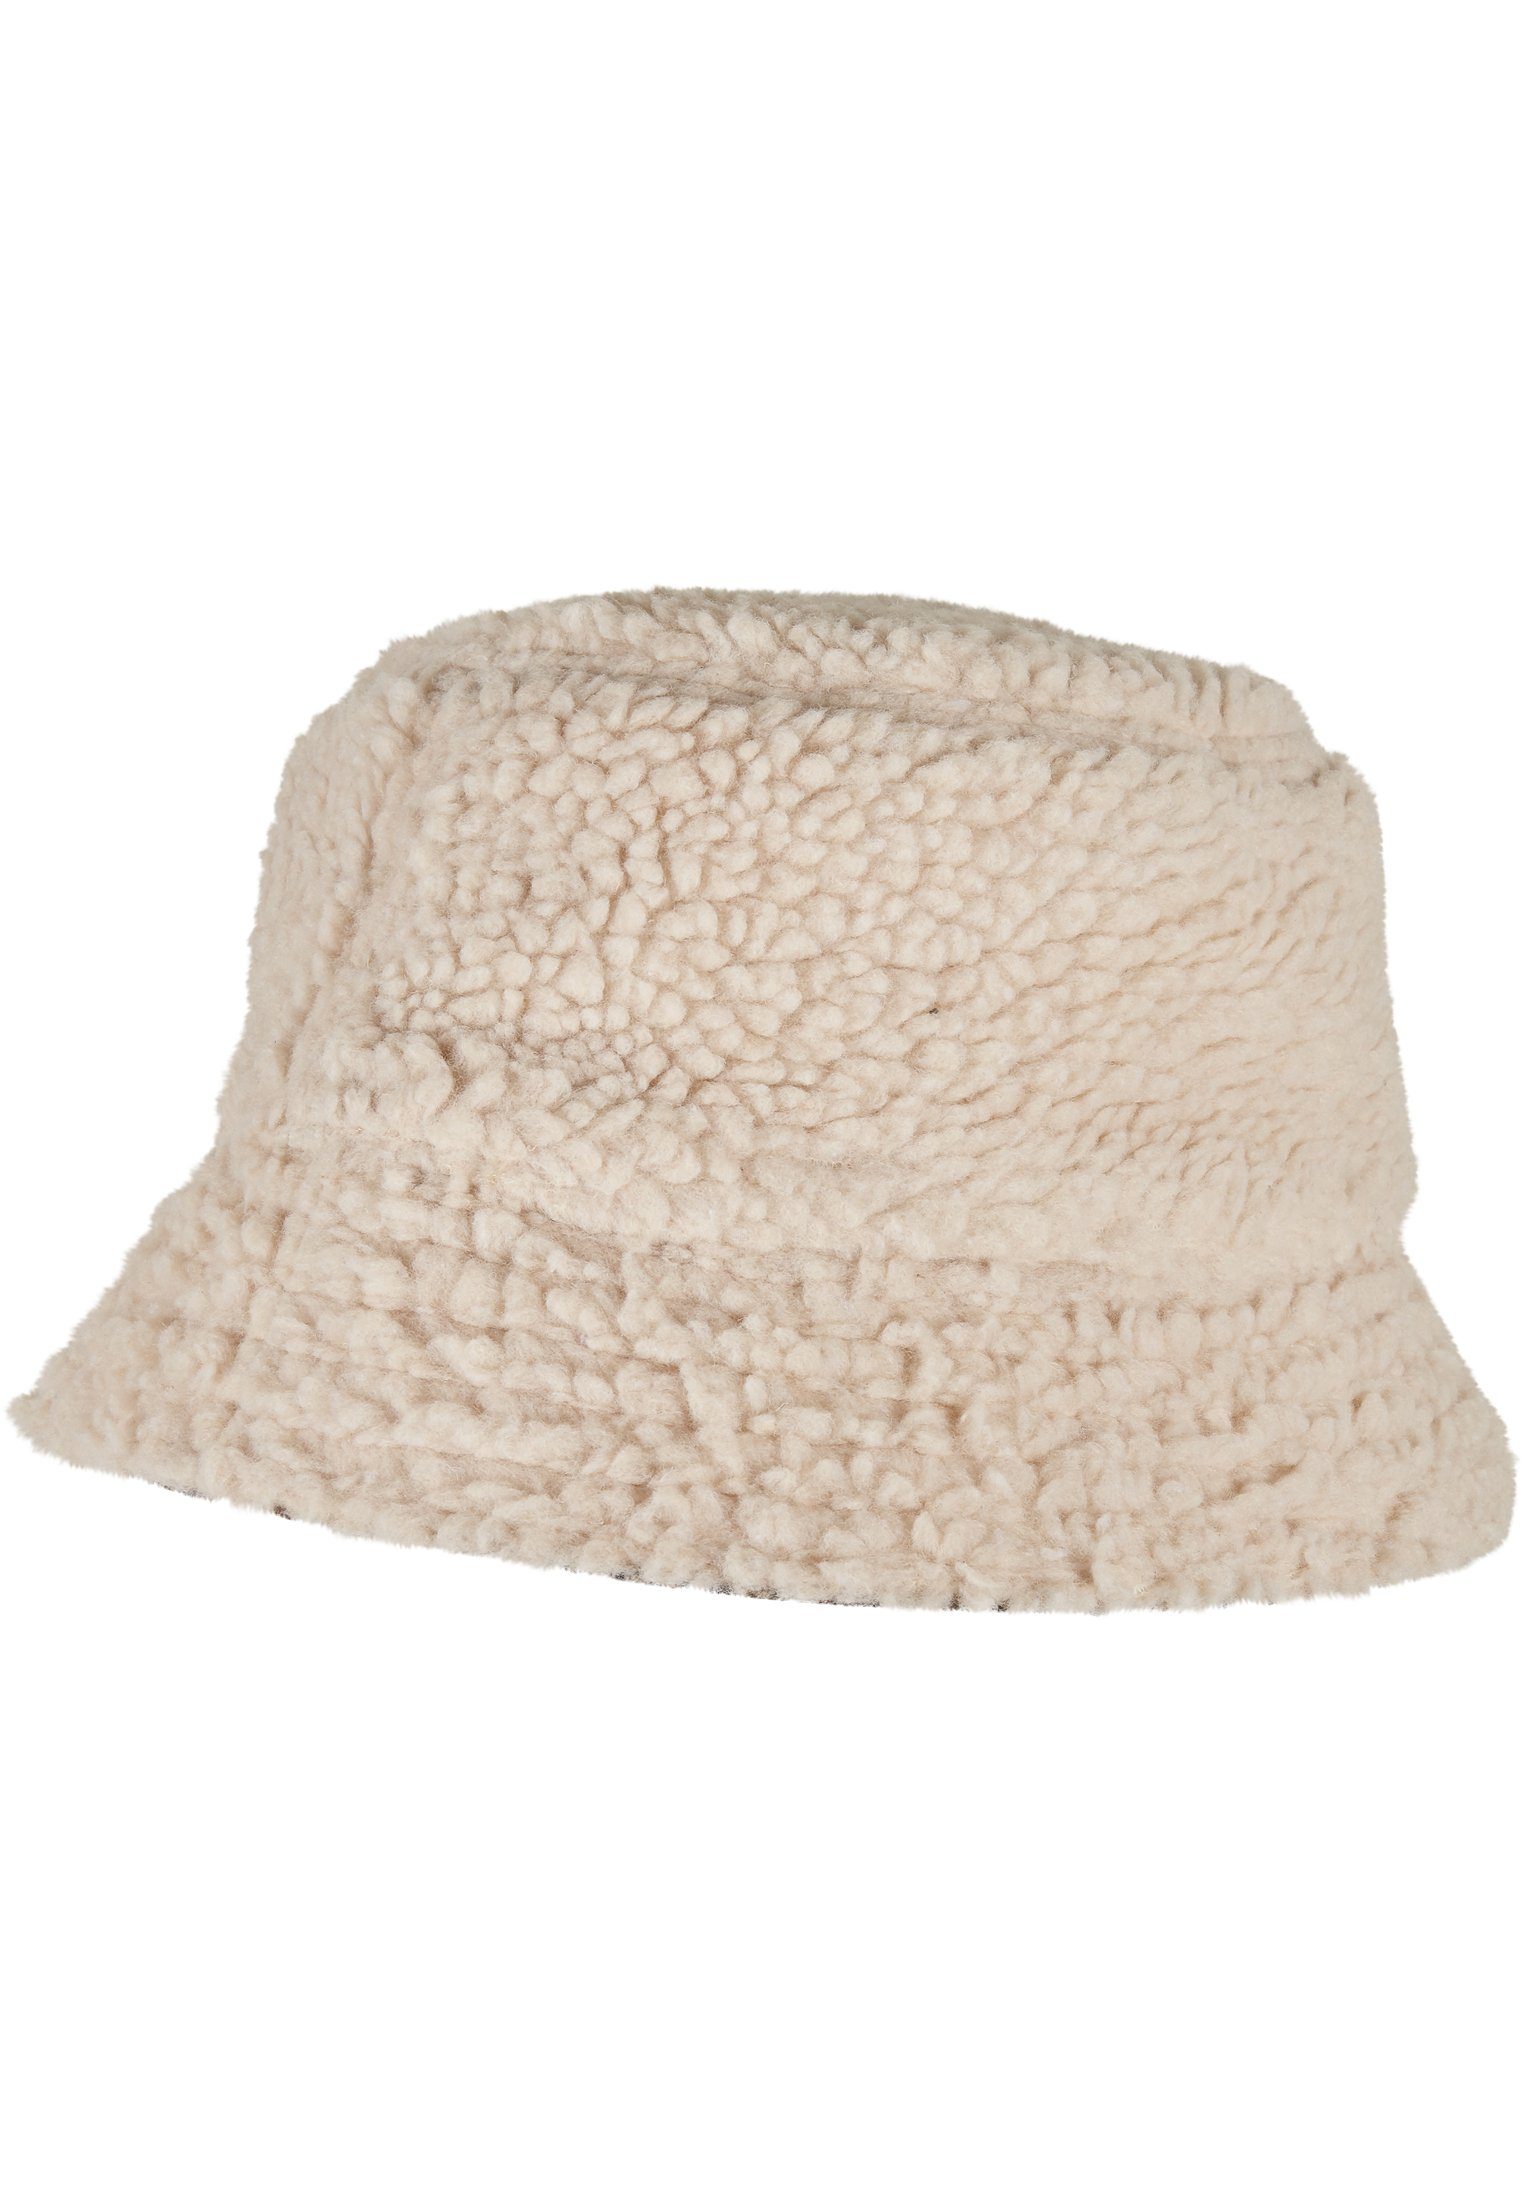 Flexfit Flex Cap Bucket Hat Real Tree Camo Reversible Hat Bucket Sherpa